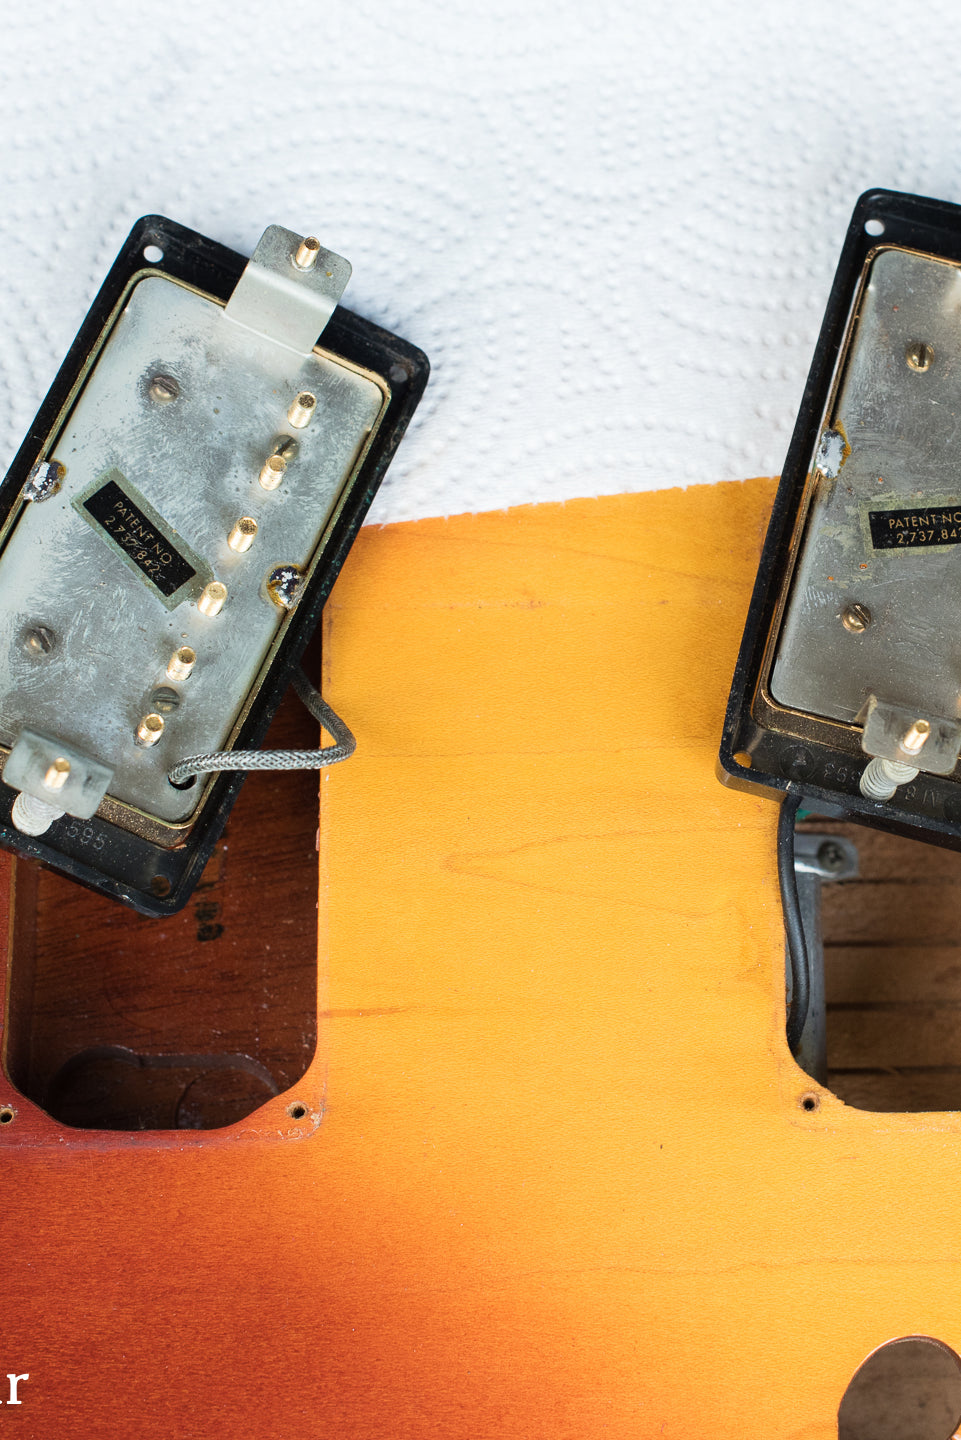 Patent number sticker humbucking pickups, Vintage 1972 Gibson ES-345 Stereo Sunburst